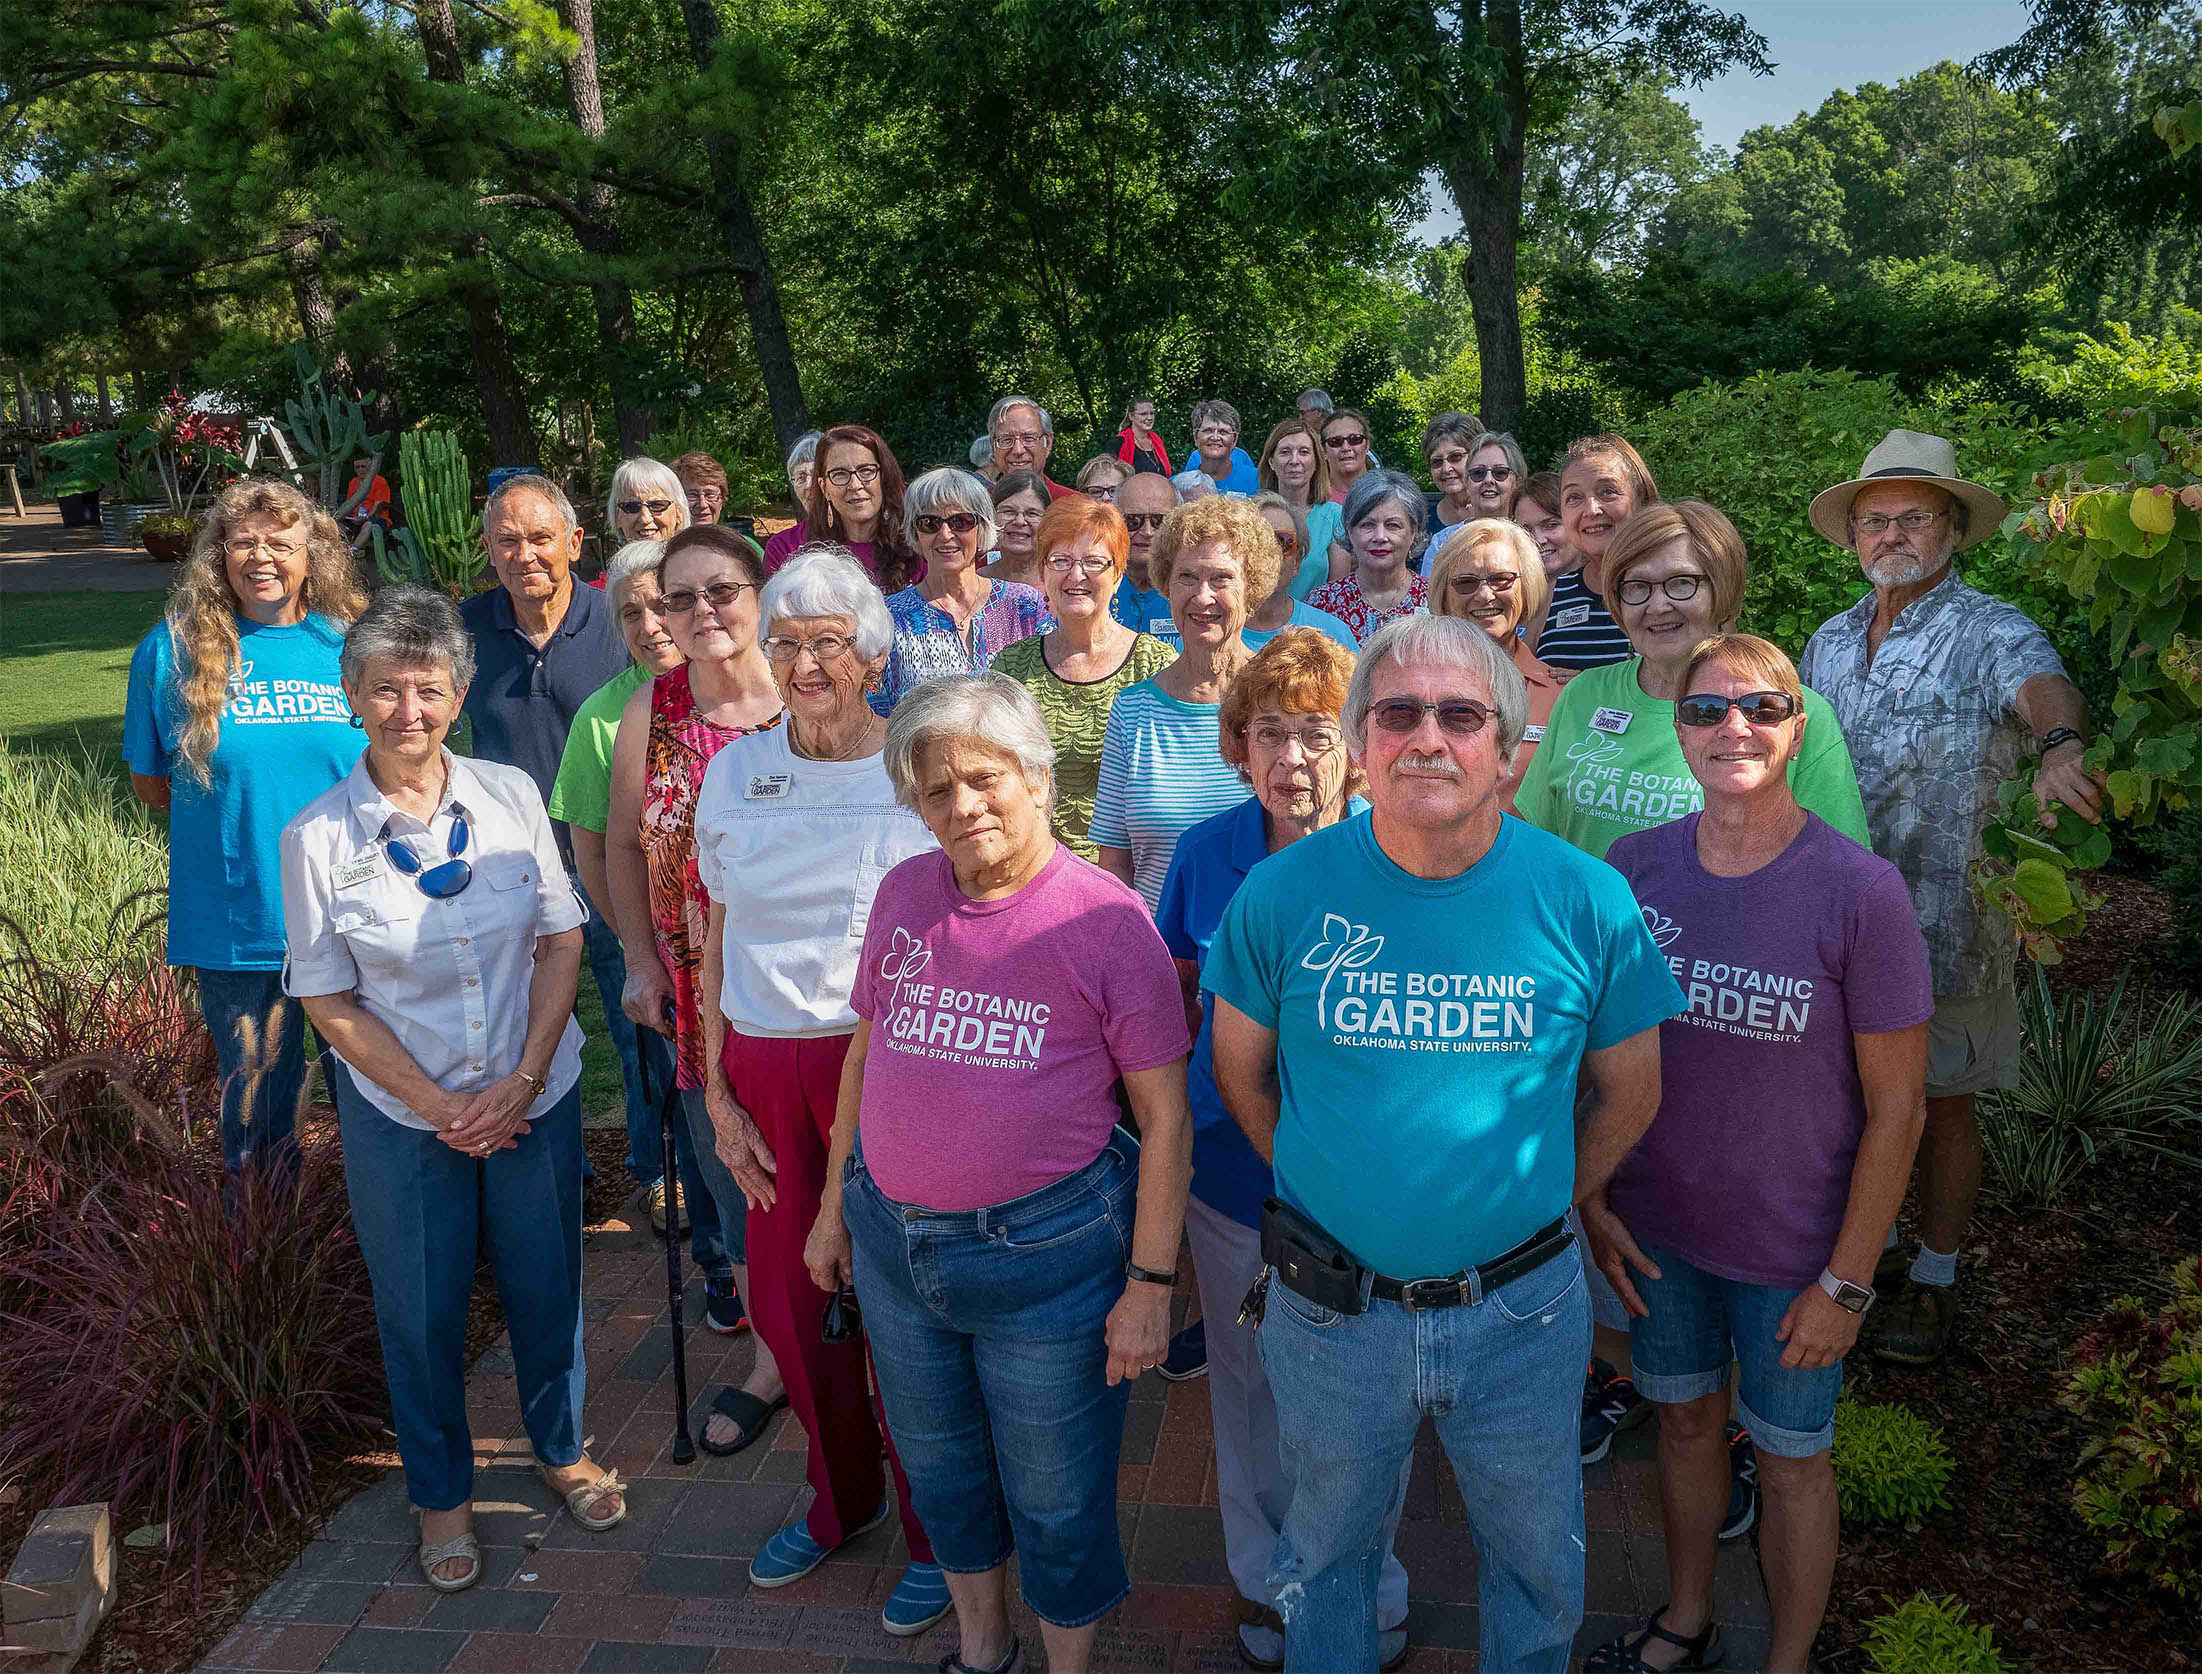 A group photo of the 2019 Botanic Garden Ambassadors.